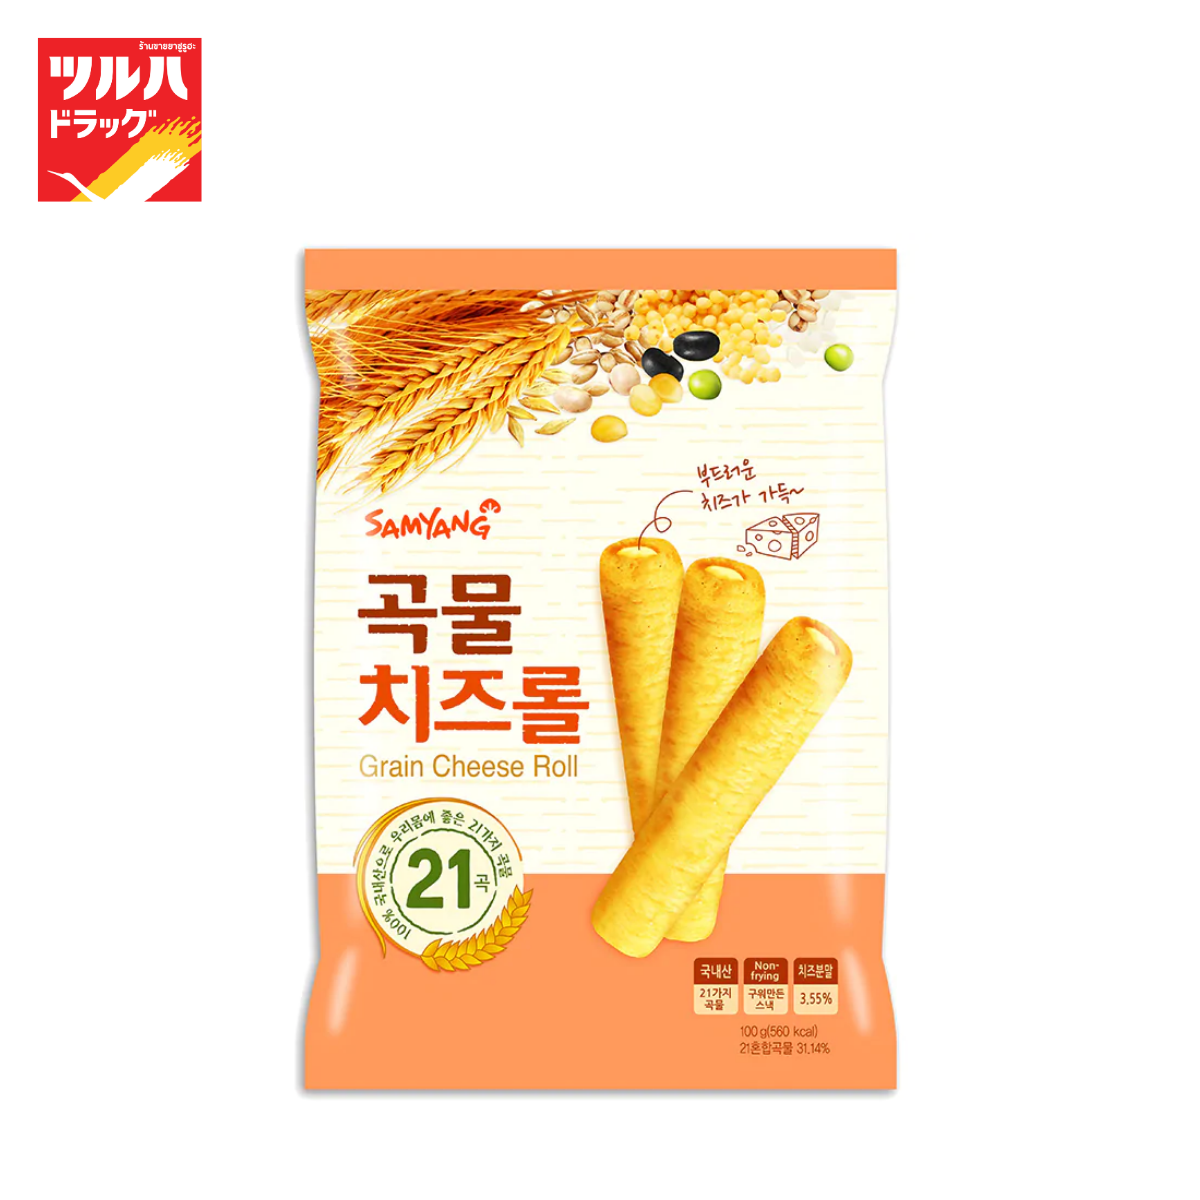 Samyang Grain Cheese Roll 80 g. / ซัมยัง เกรนชีสโรล  80 กรัม